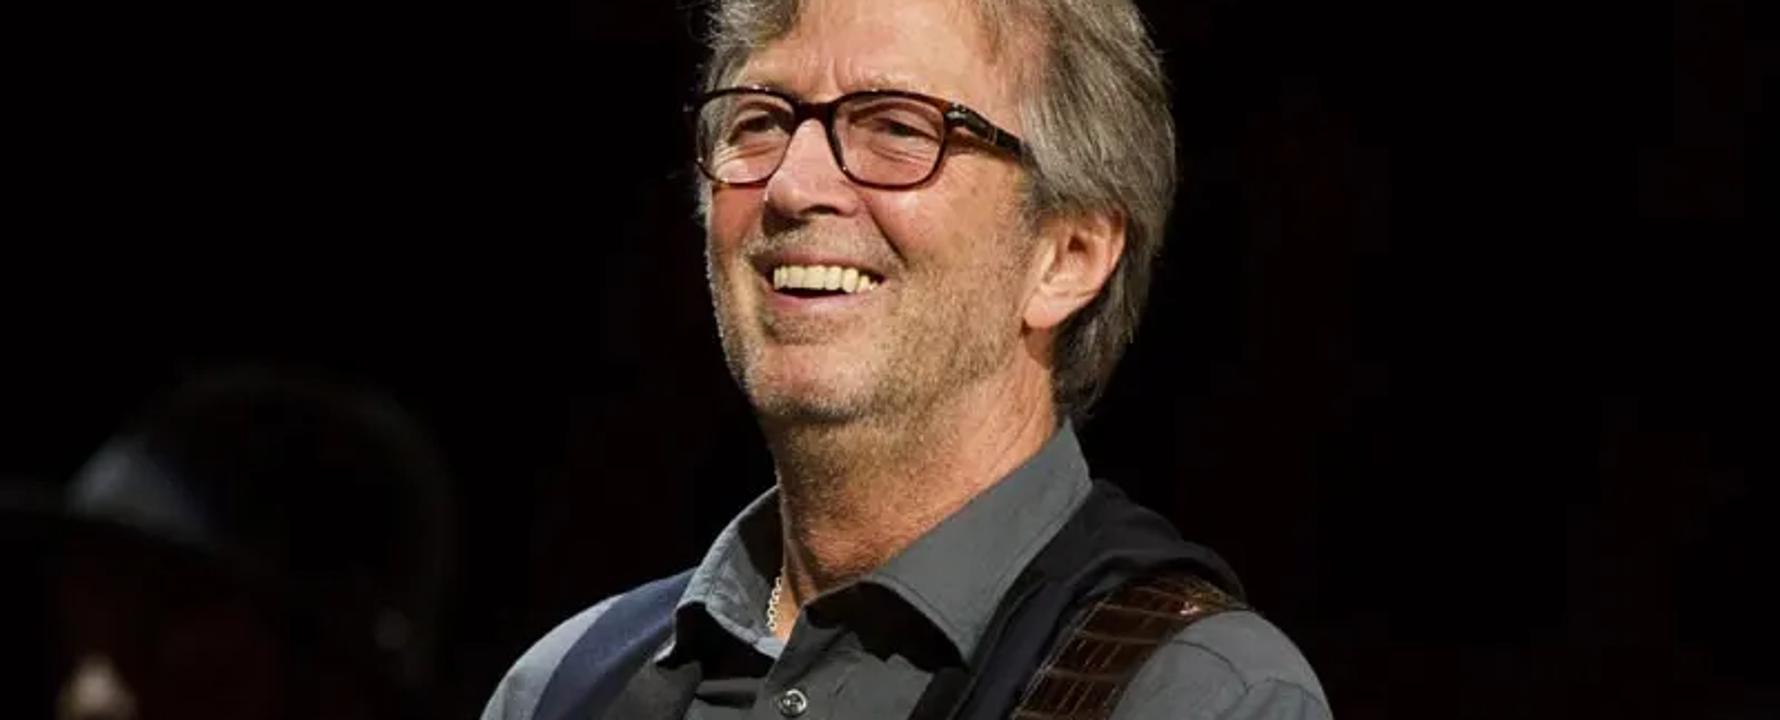 Fotografía promocional de Eric Clapton